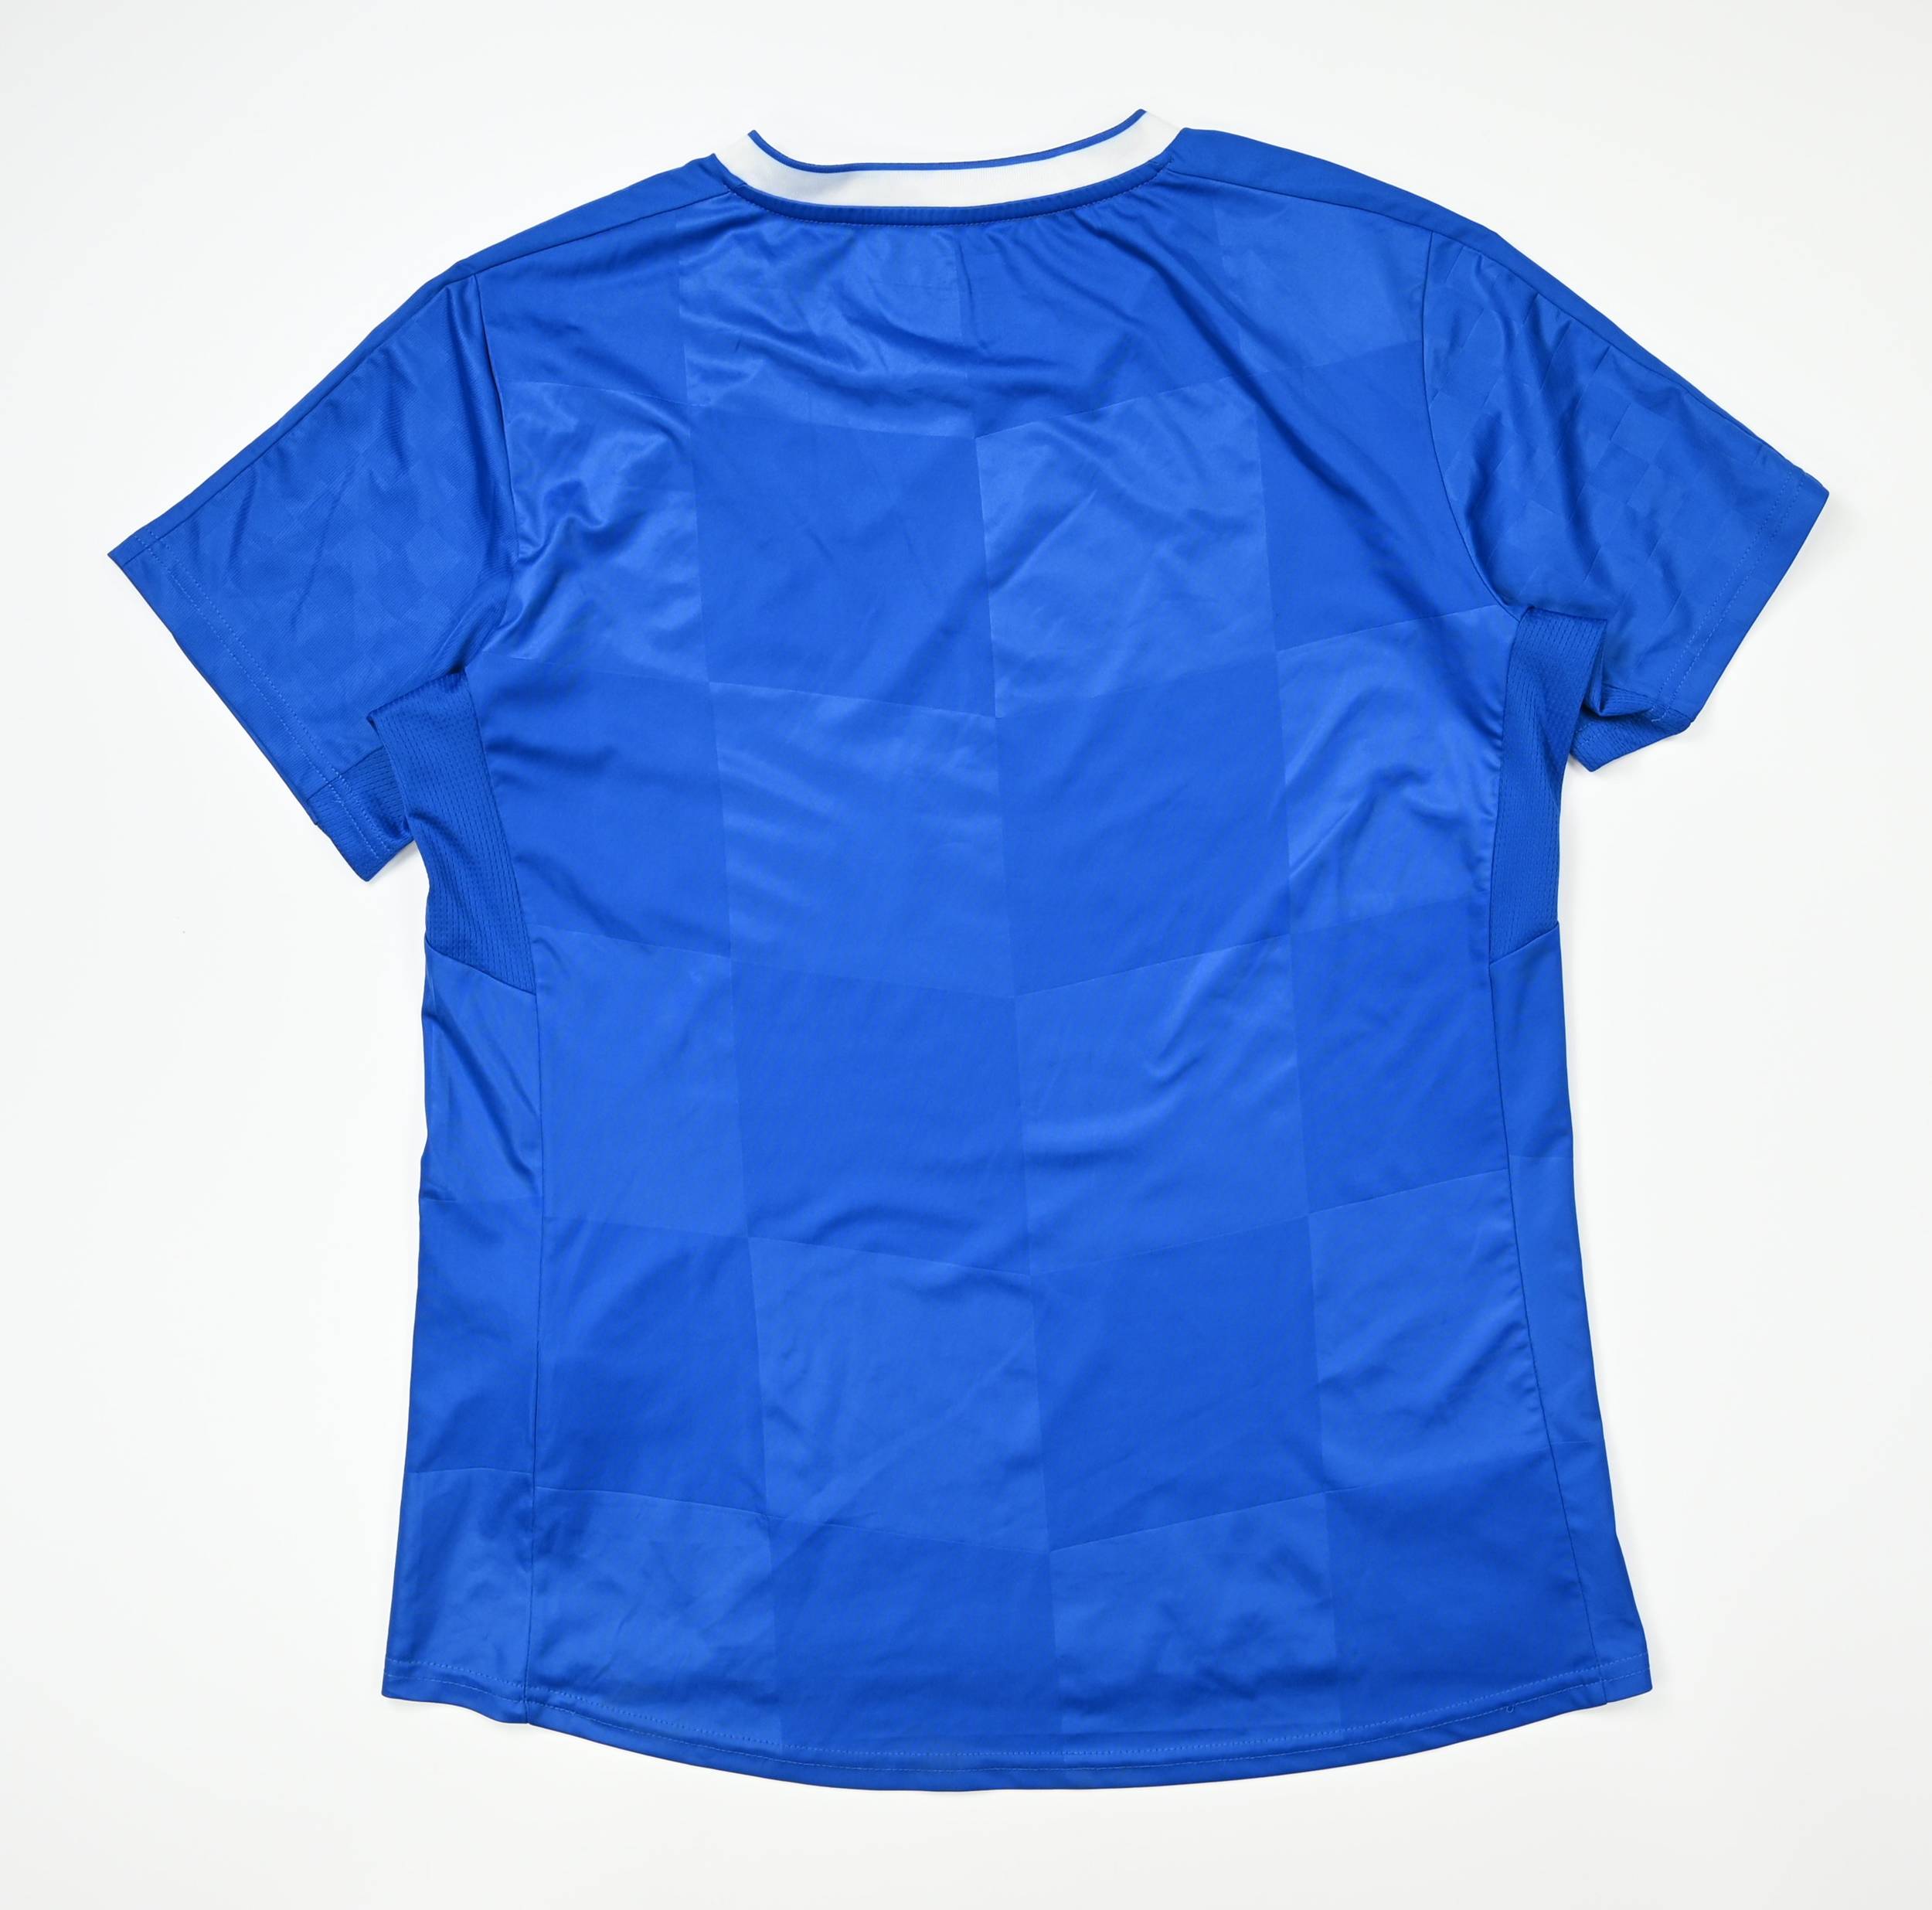 Glasgow Is Blue Football T-Shirt Rangers Football Clothing, 48% OFF